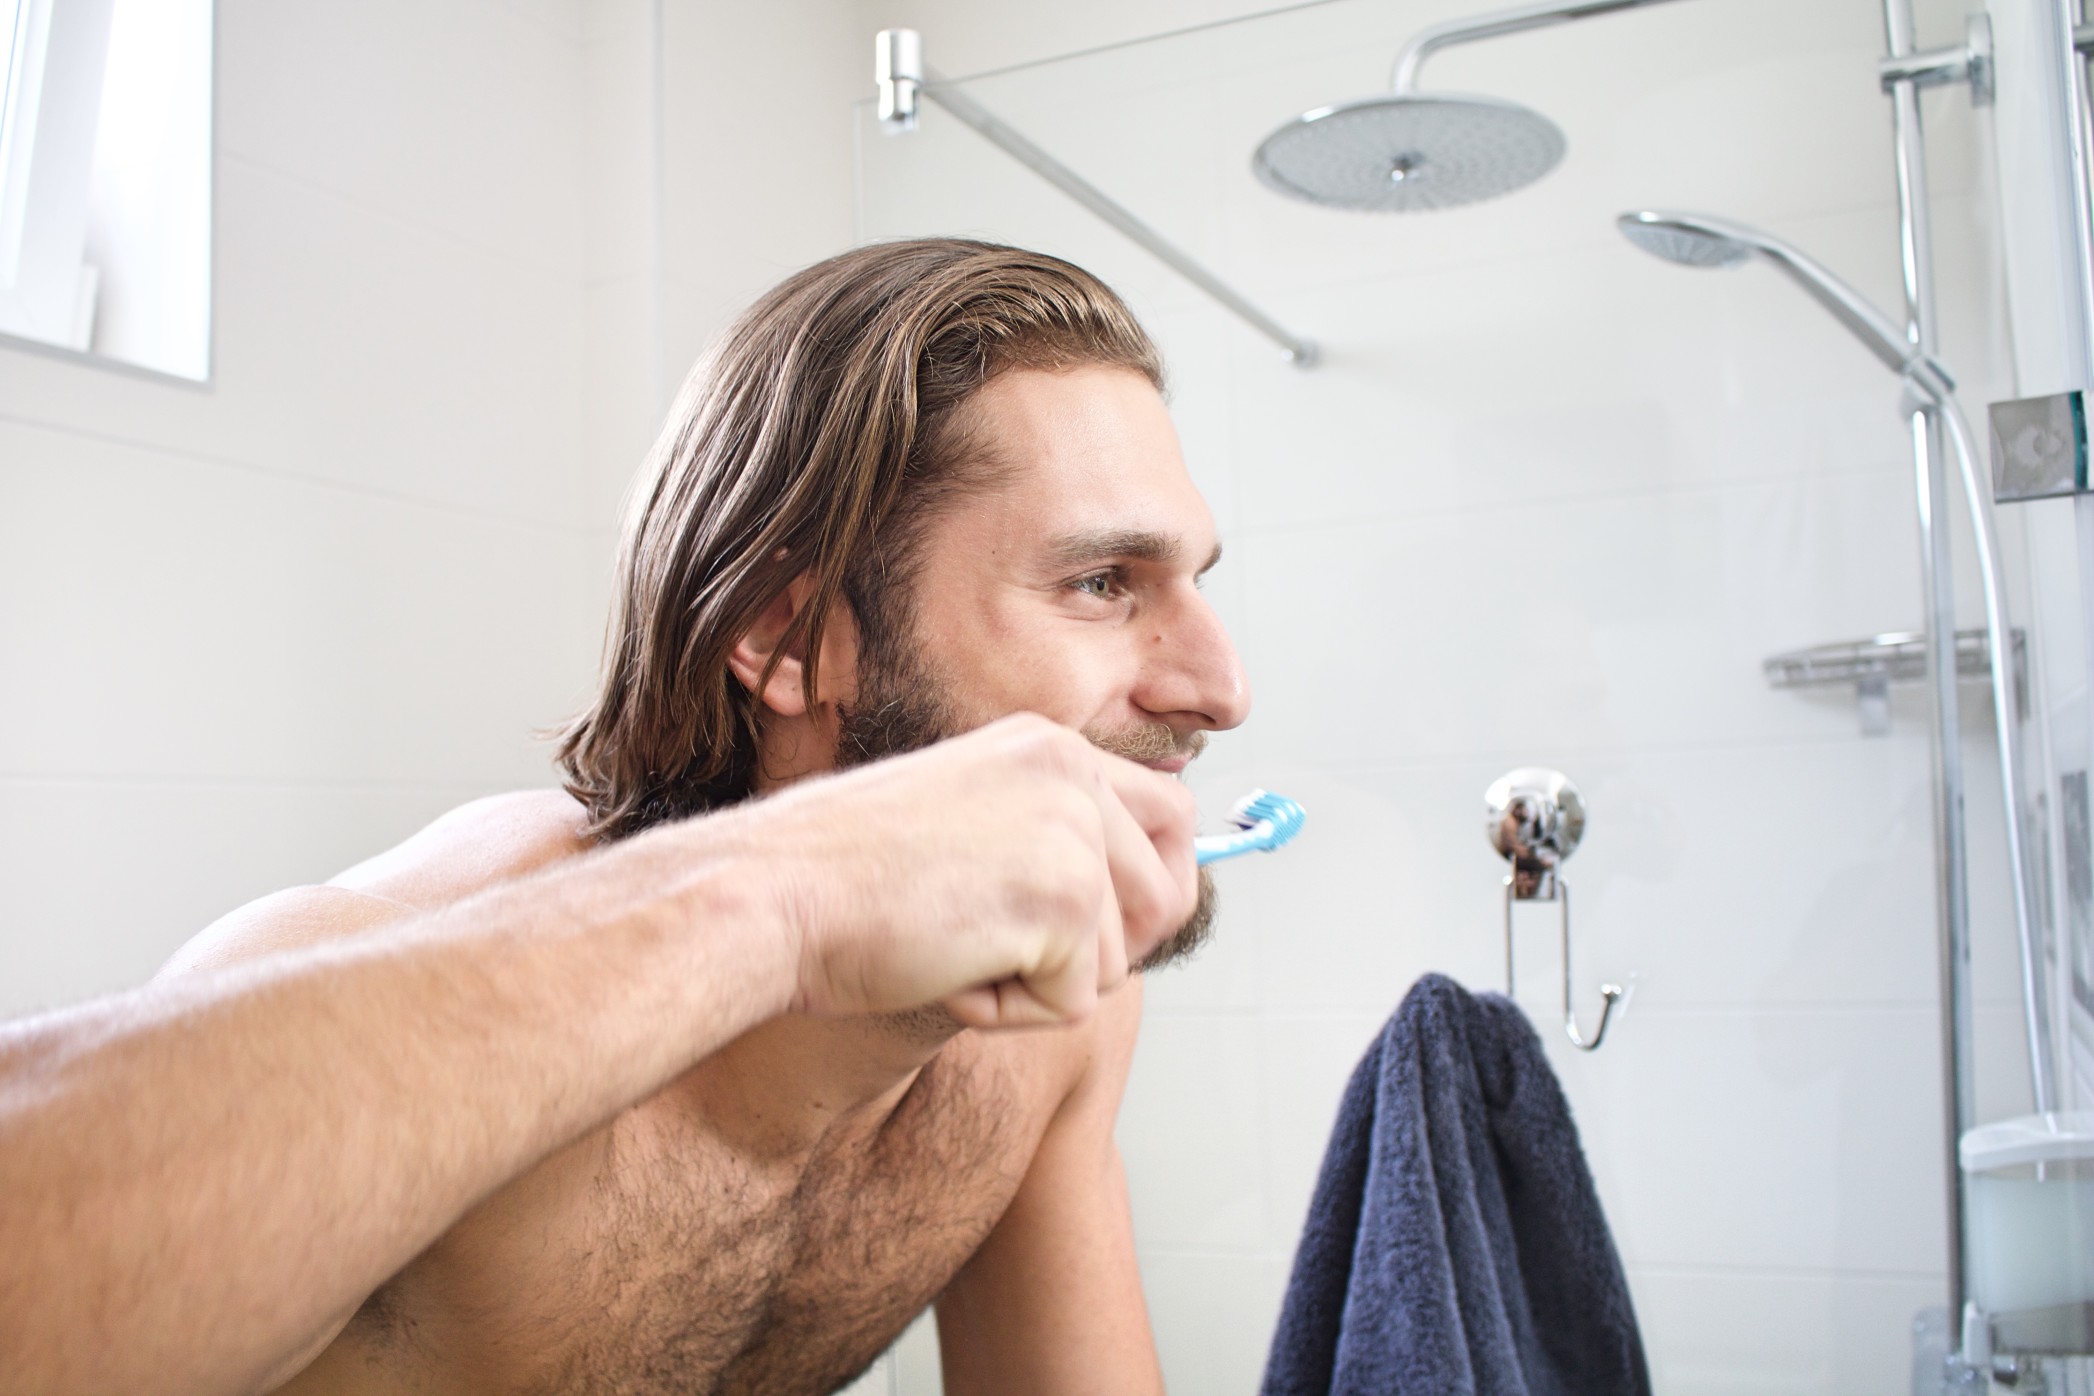 Tips for brushing teeth